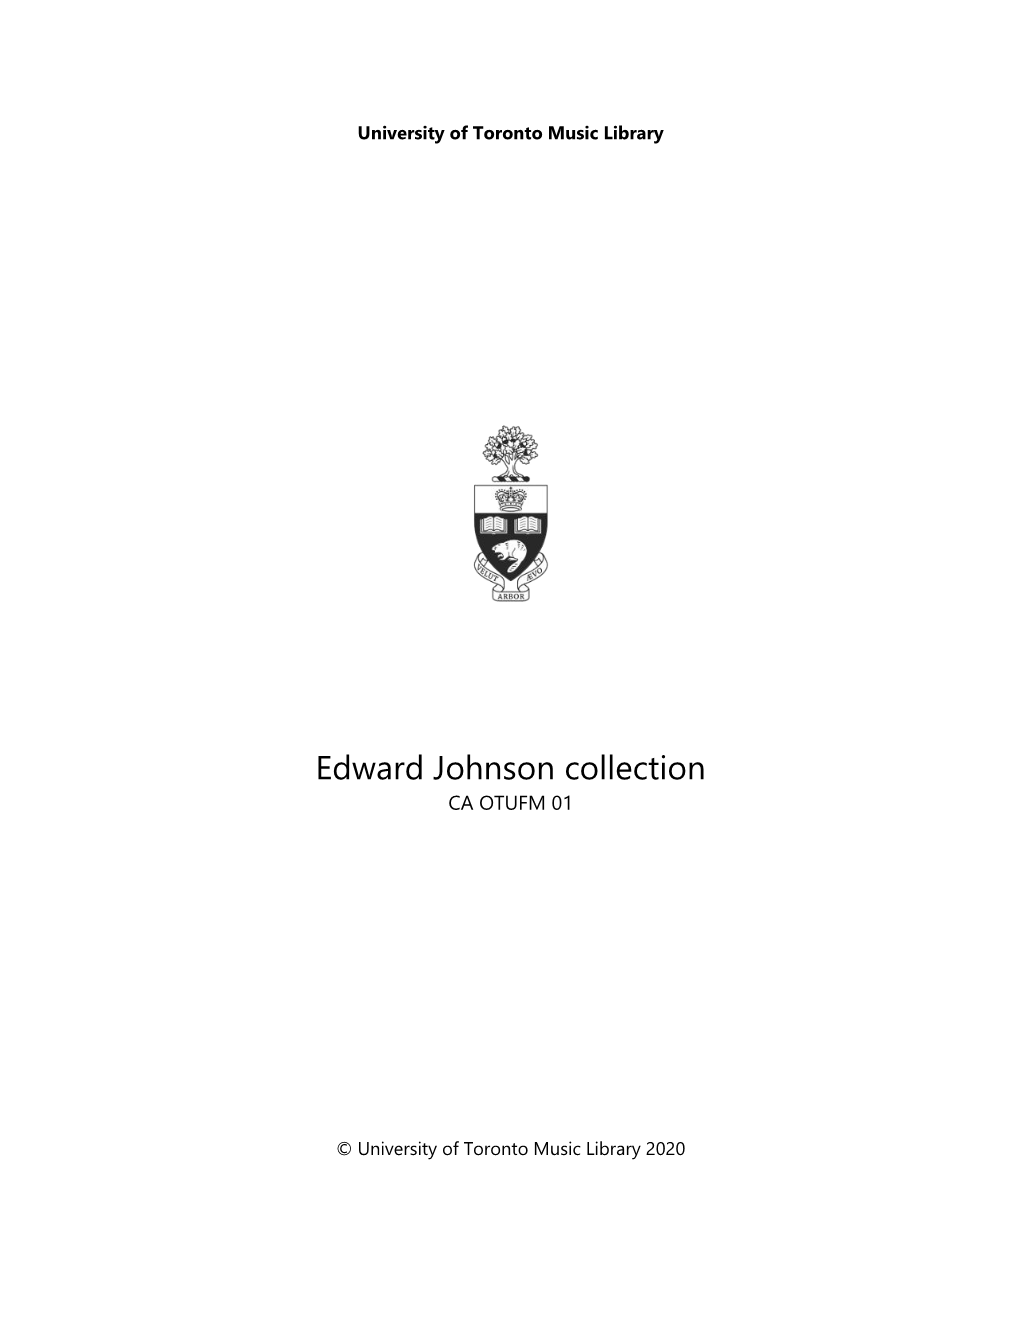 Edward Johnson Collection CA OTUFM 01